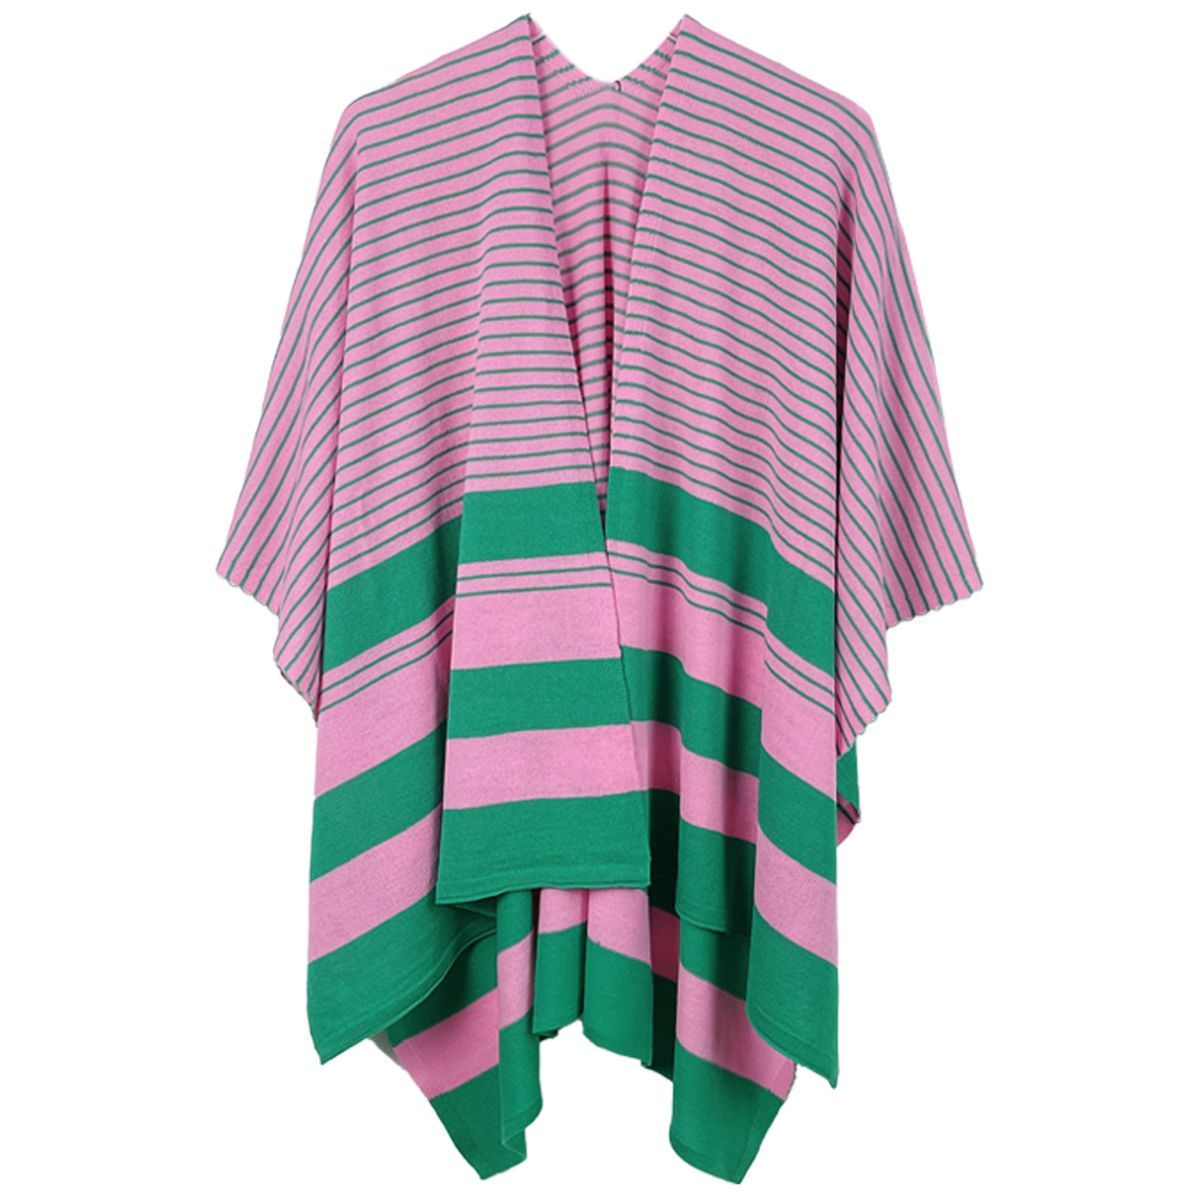 Ruana Kimono Striped Pink and Green for Women